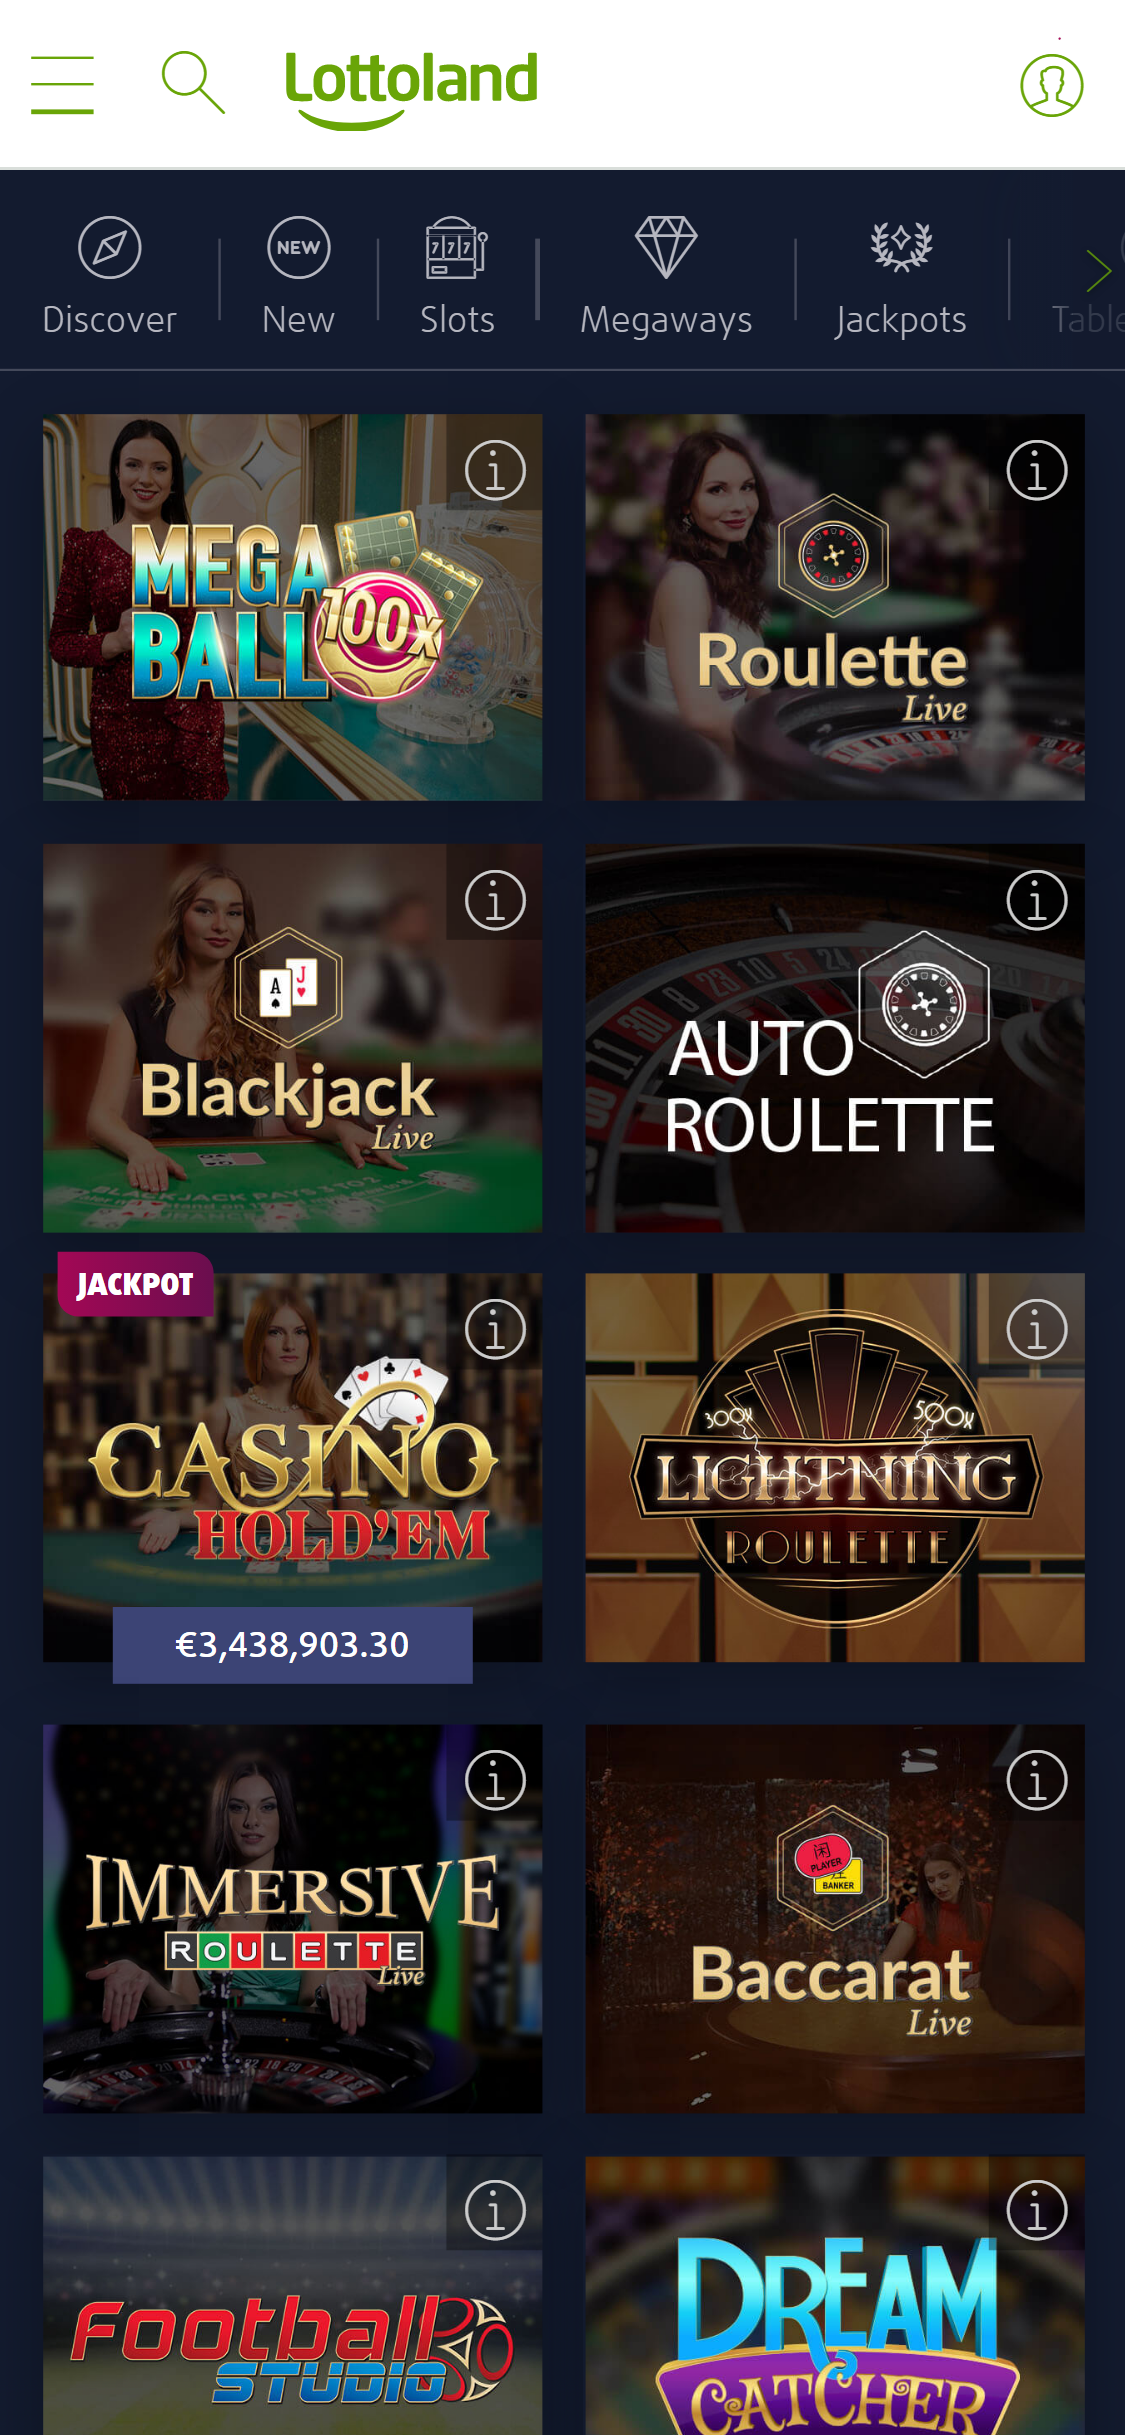 Lottoland Mobile Live Dealer Games Review